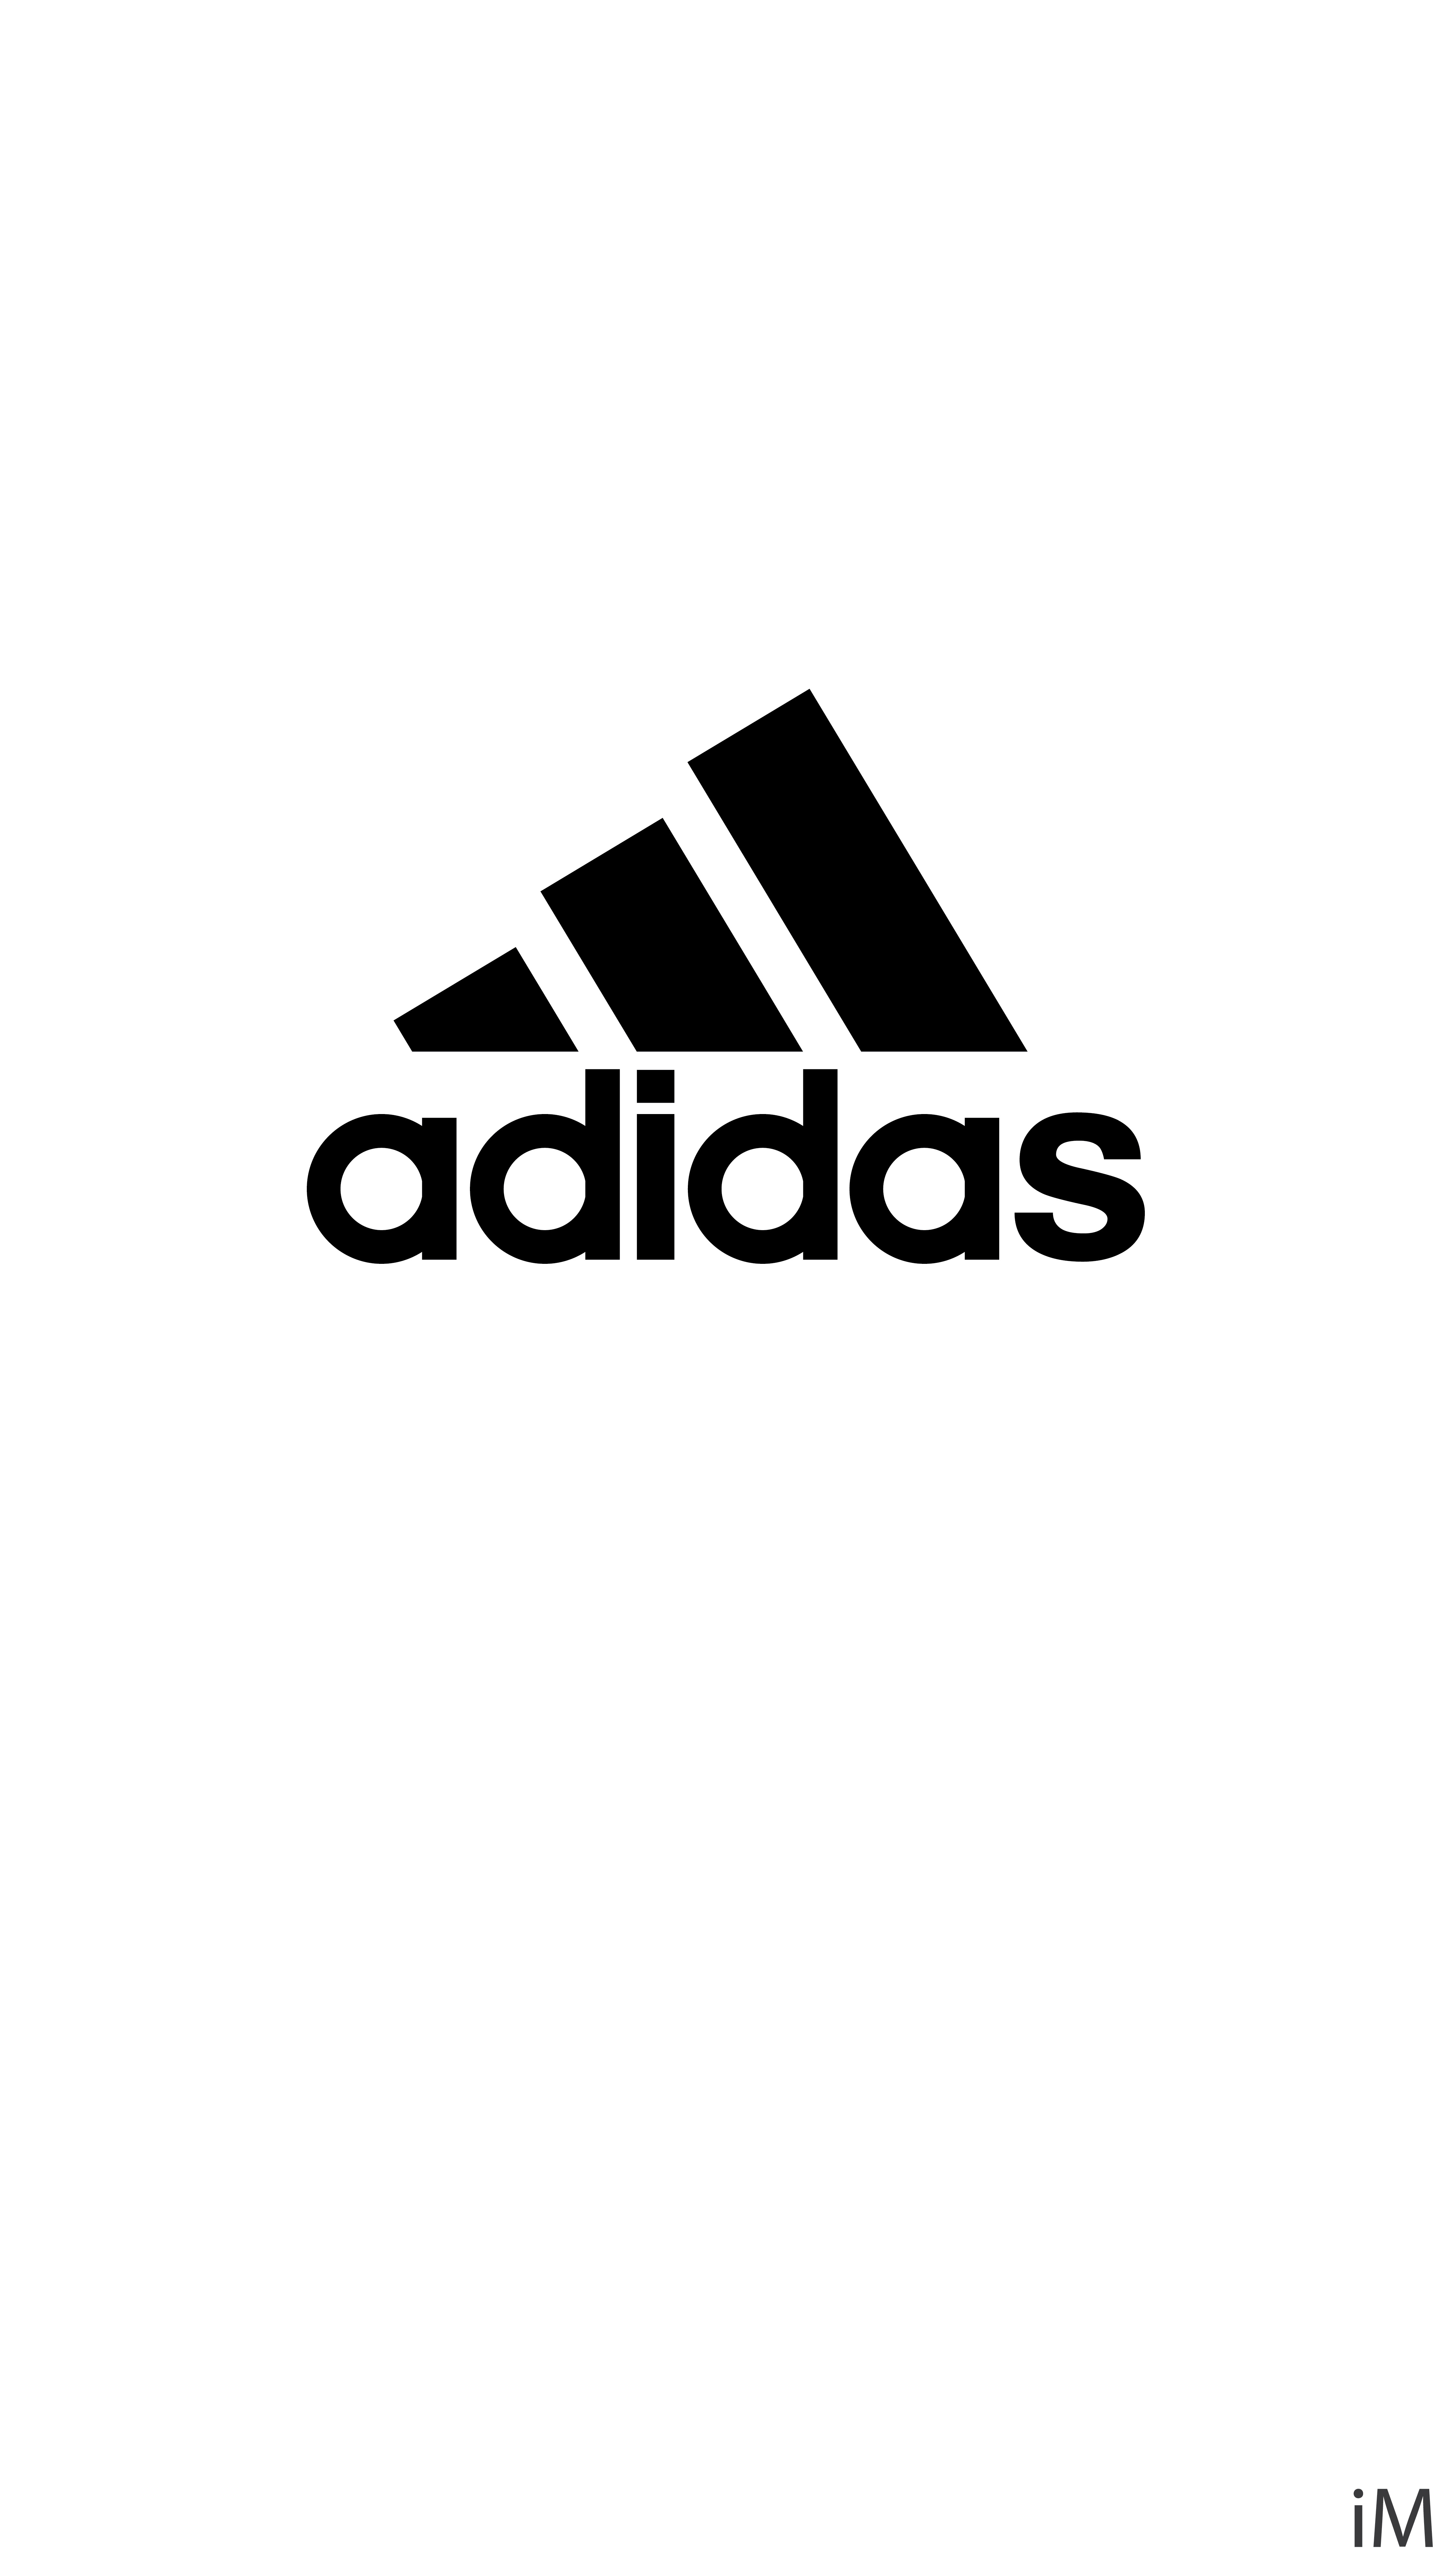 Adidas Logo Wallpaper Download